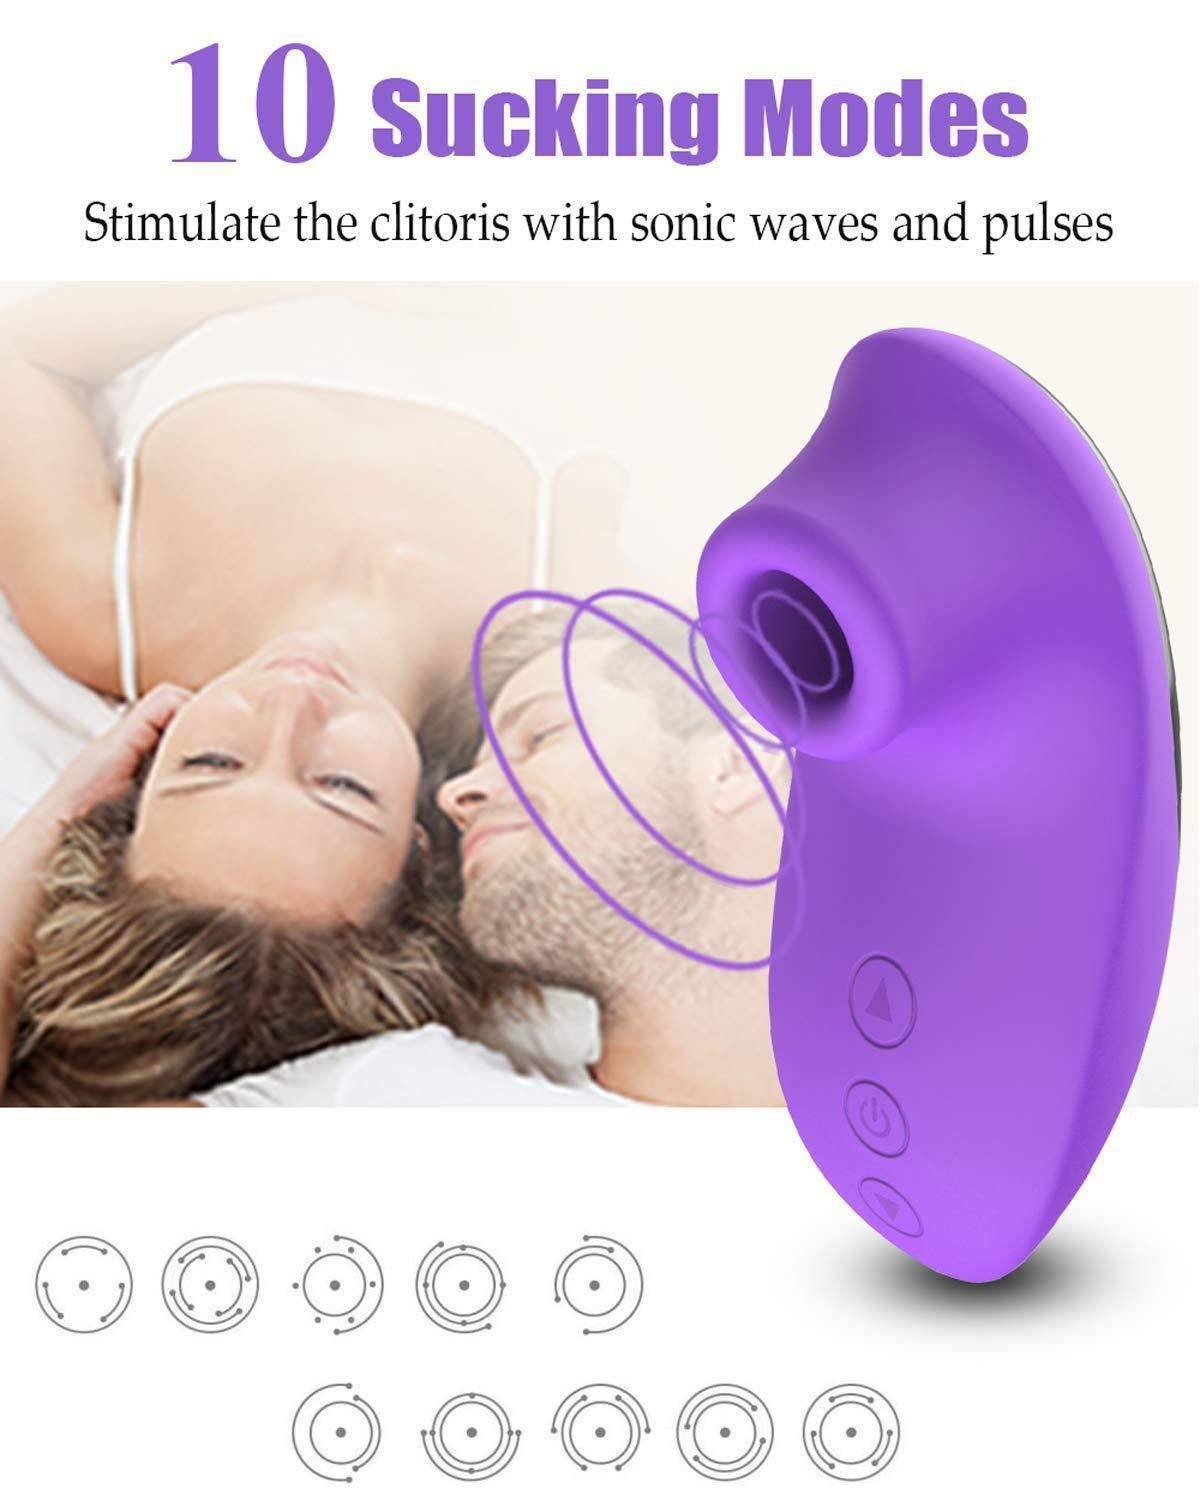 Sucking Vibrator Clitoral Massager